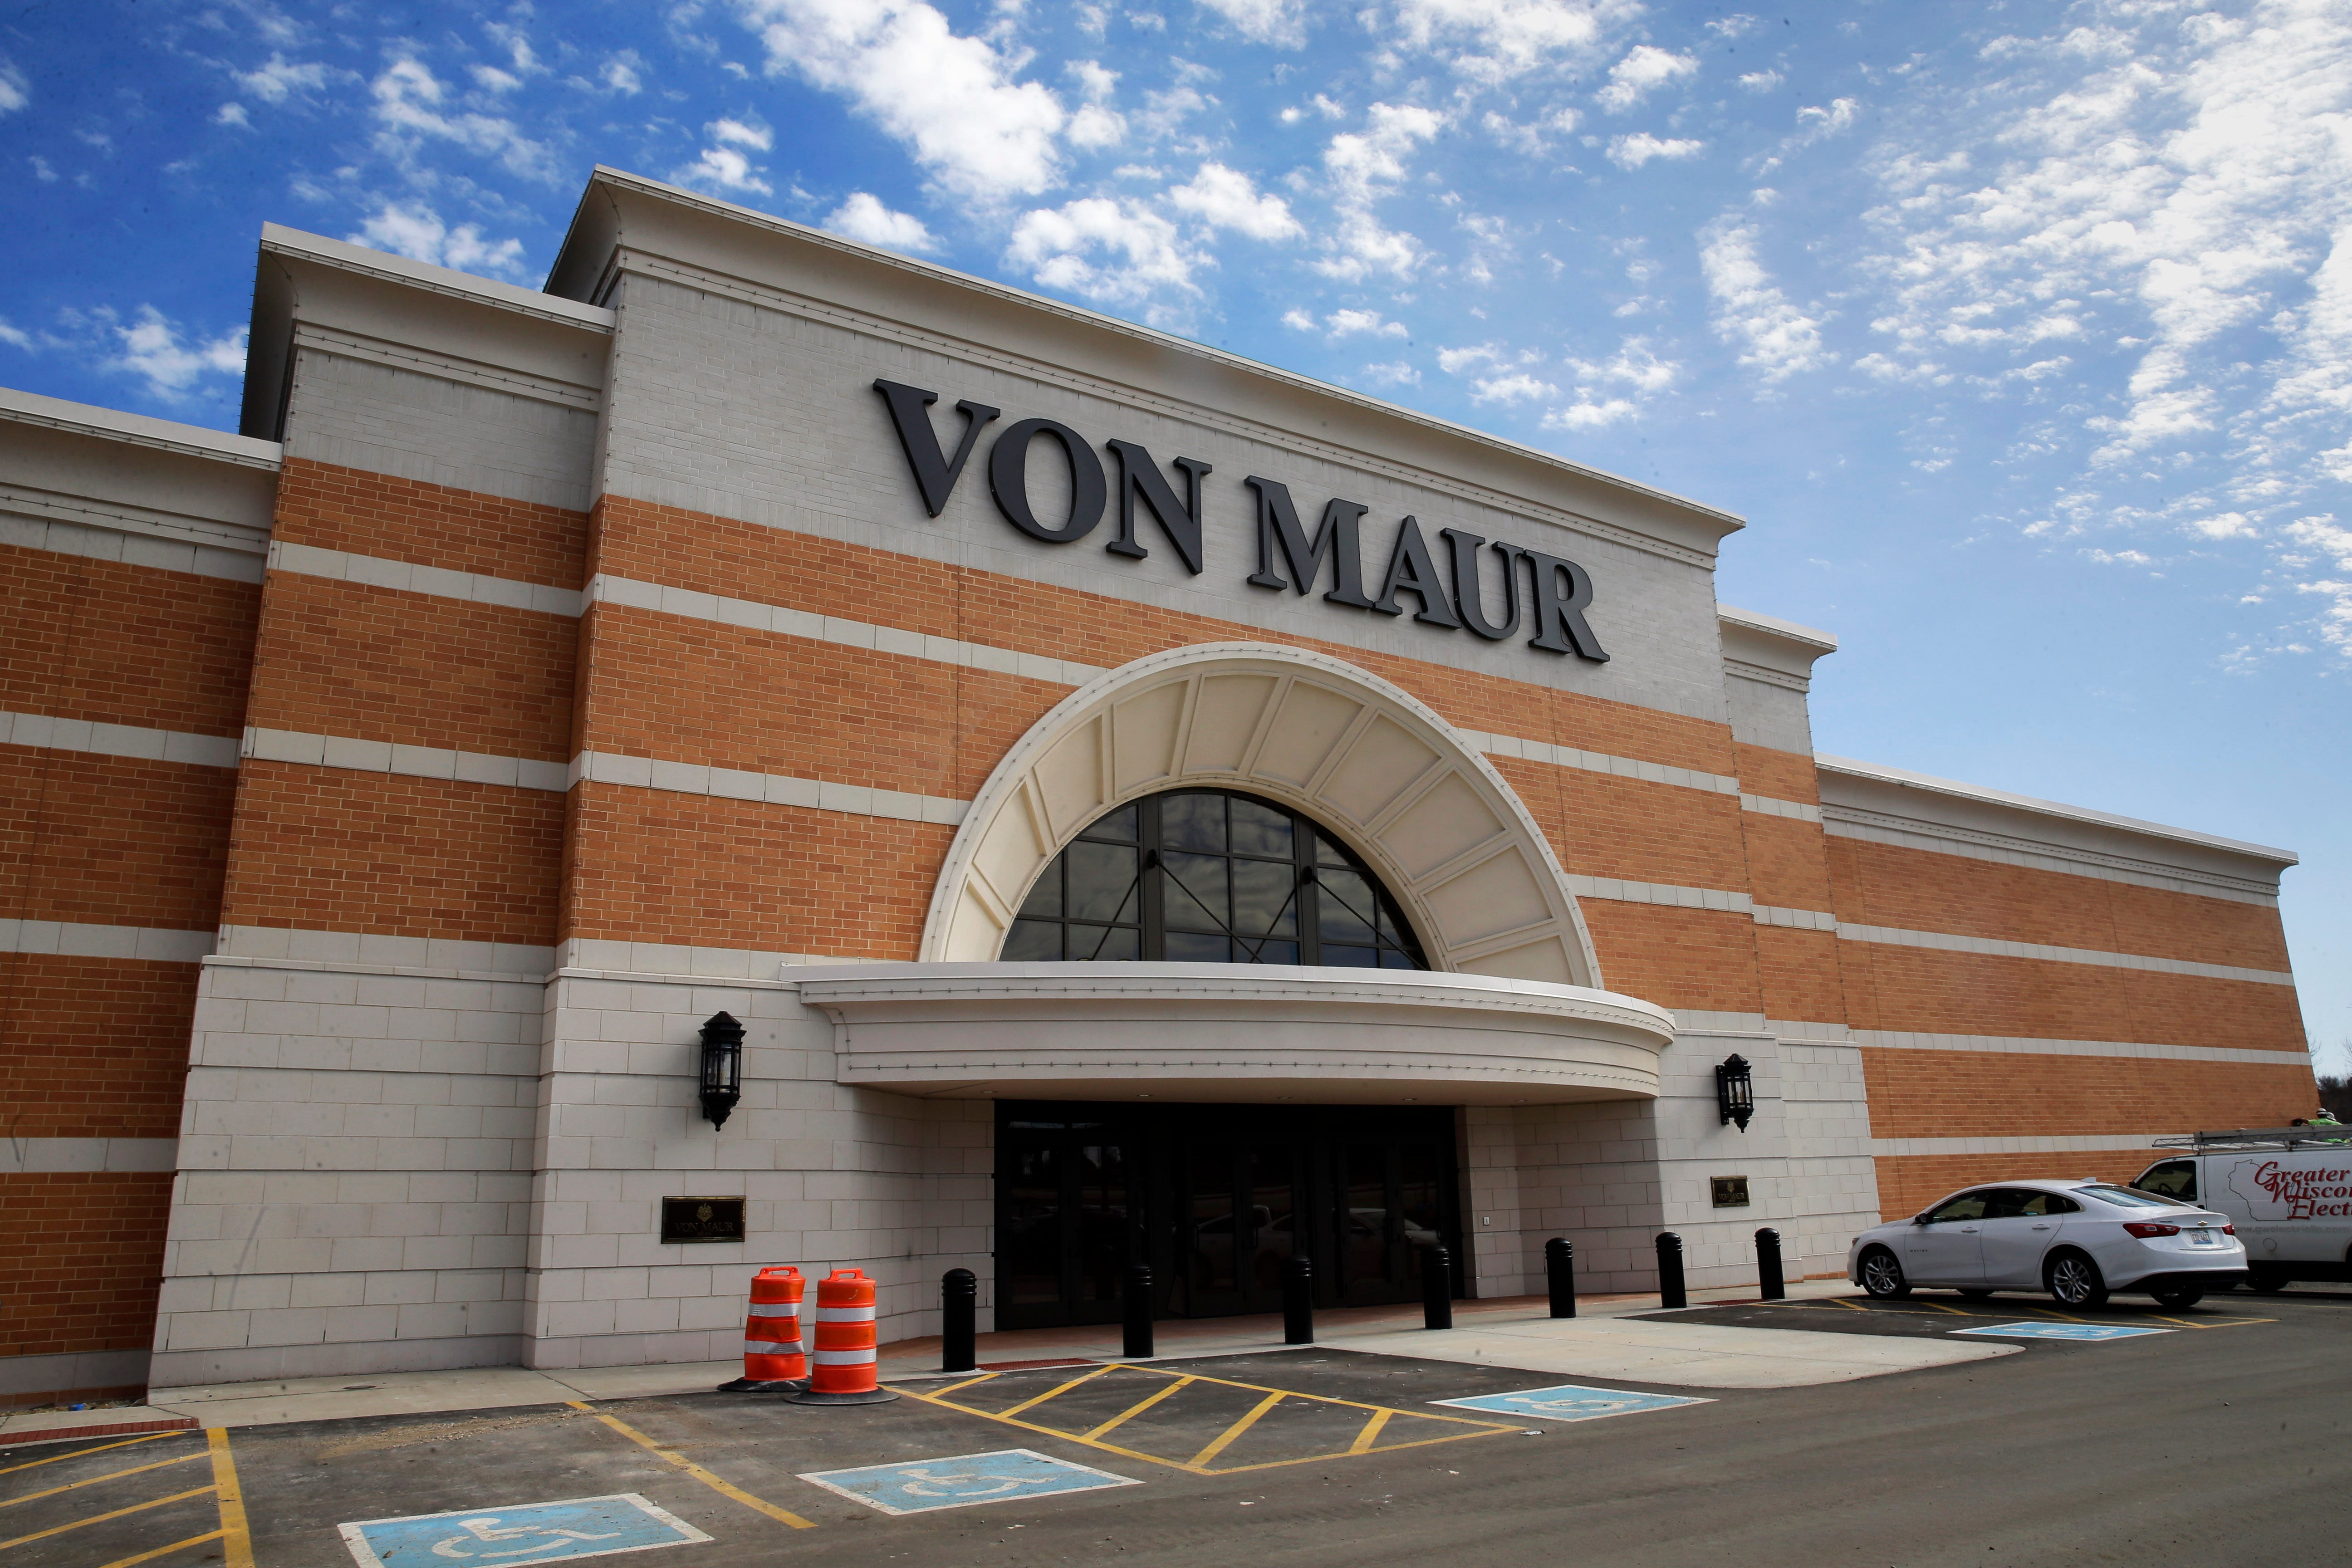 Von Maur Department store takes shape